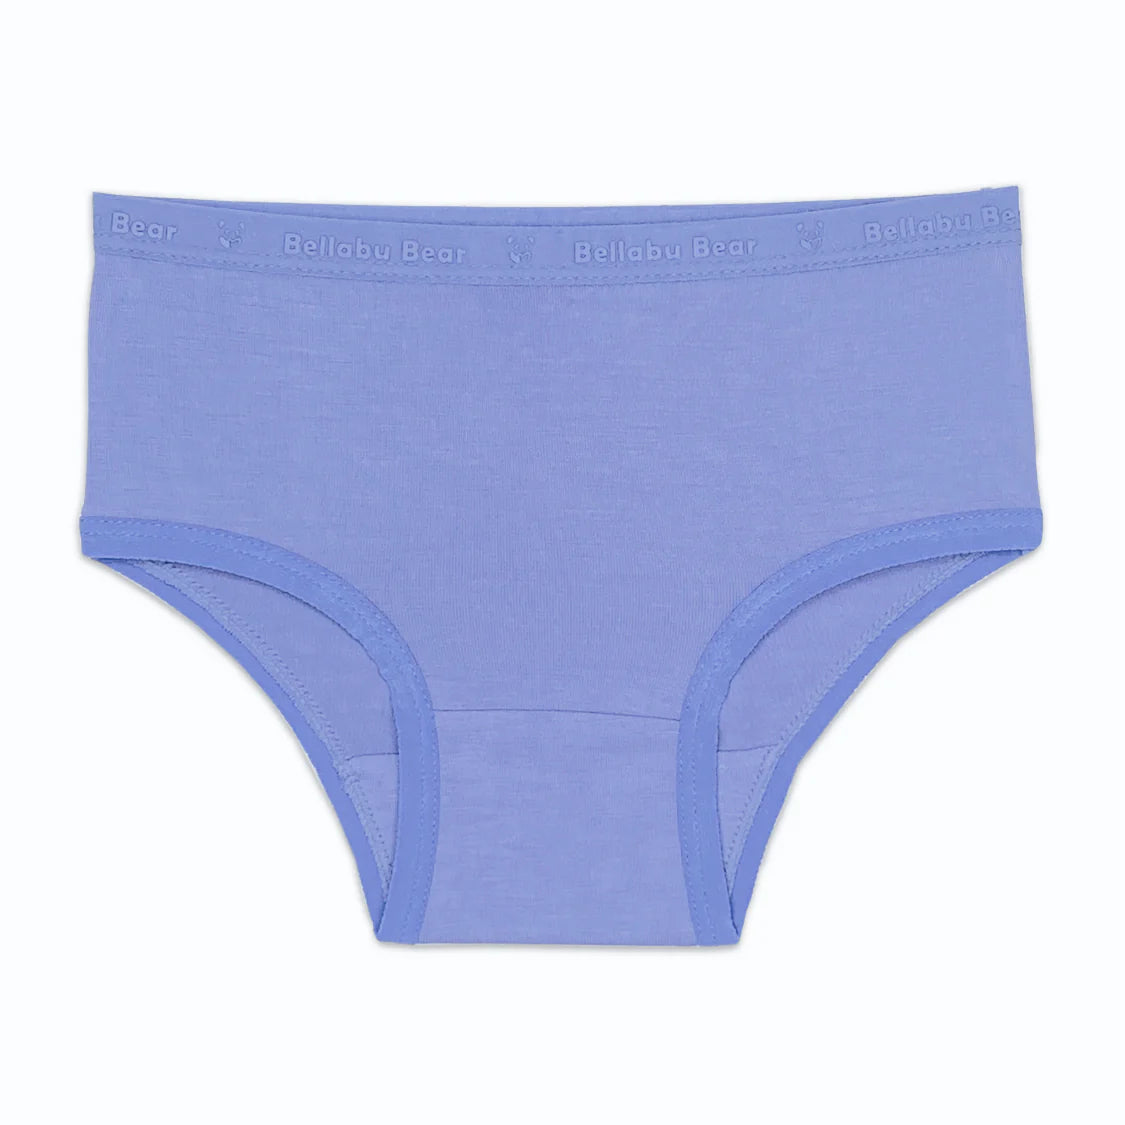 Dusty Blue Bamboo Underwear 150 GIRLS APPAREL 2-8 Bellabu Bear 2/3 